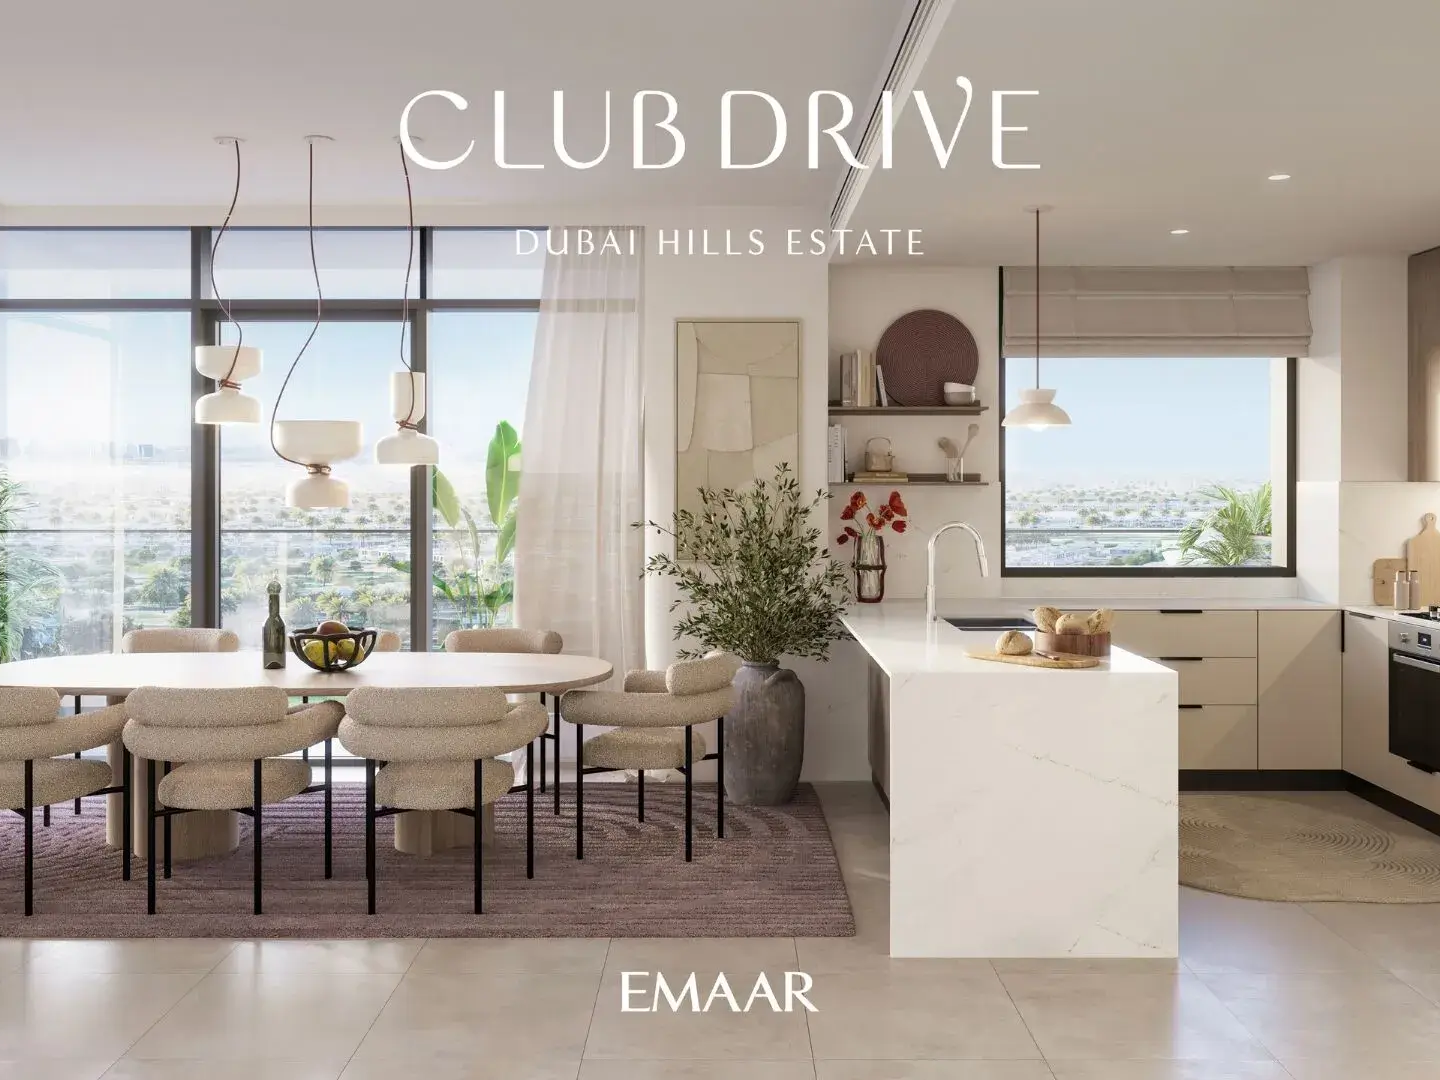 Club drive - Emaar immobilier à Dubai hills estate 